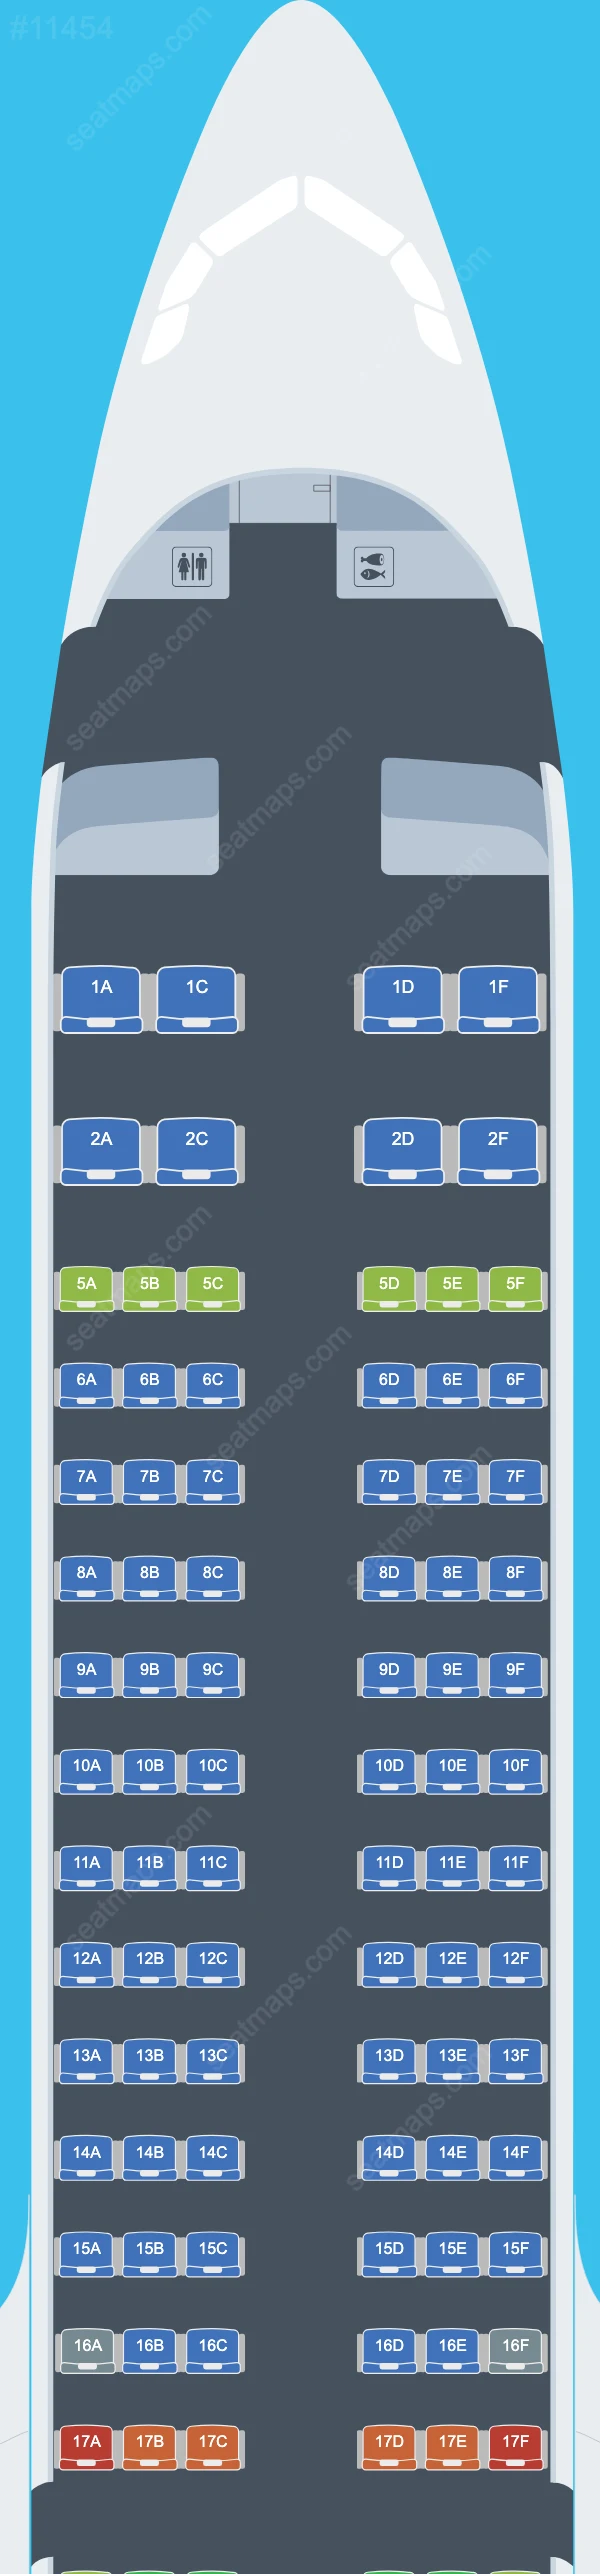 Схема салонов HiSky Europe в самолетах Airbus A321neo A321neo